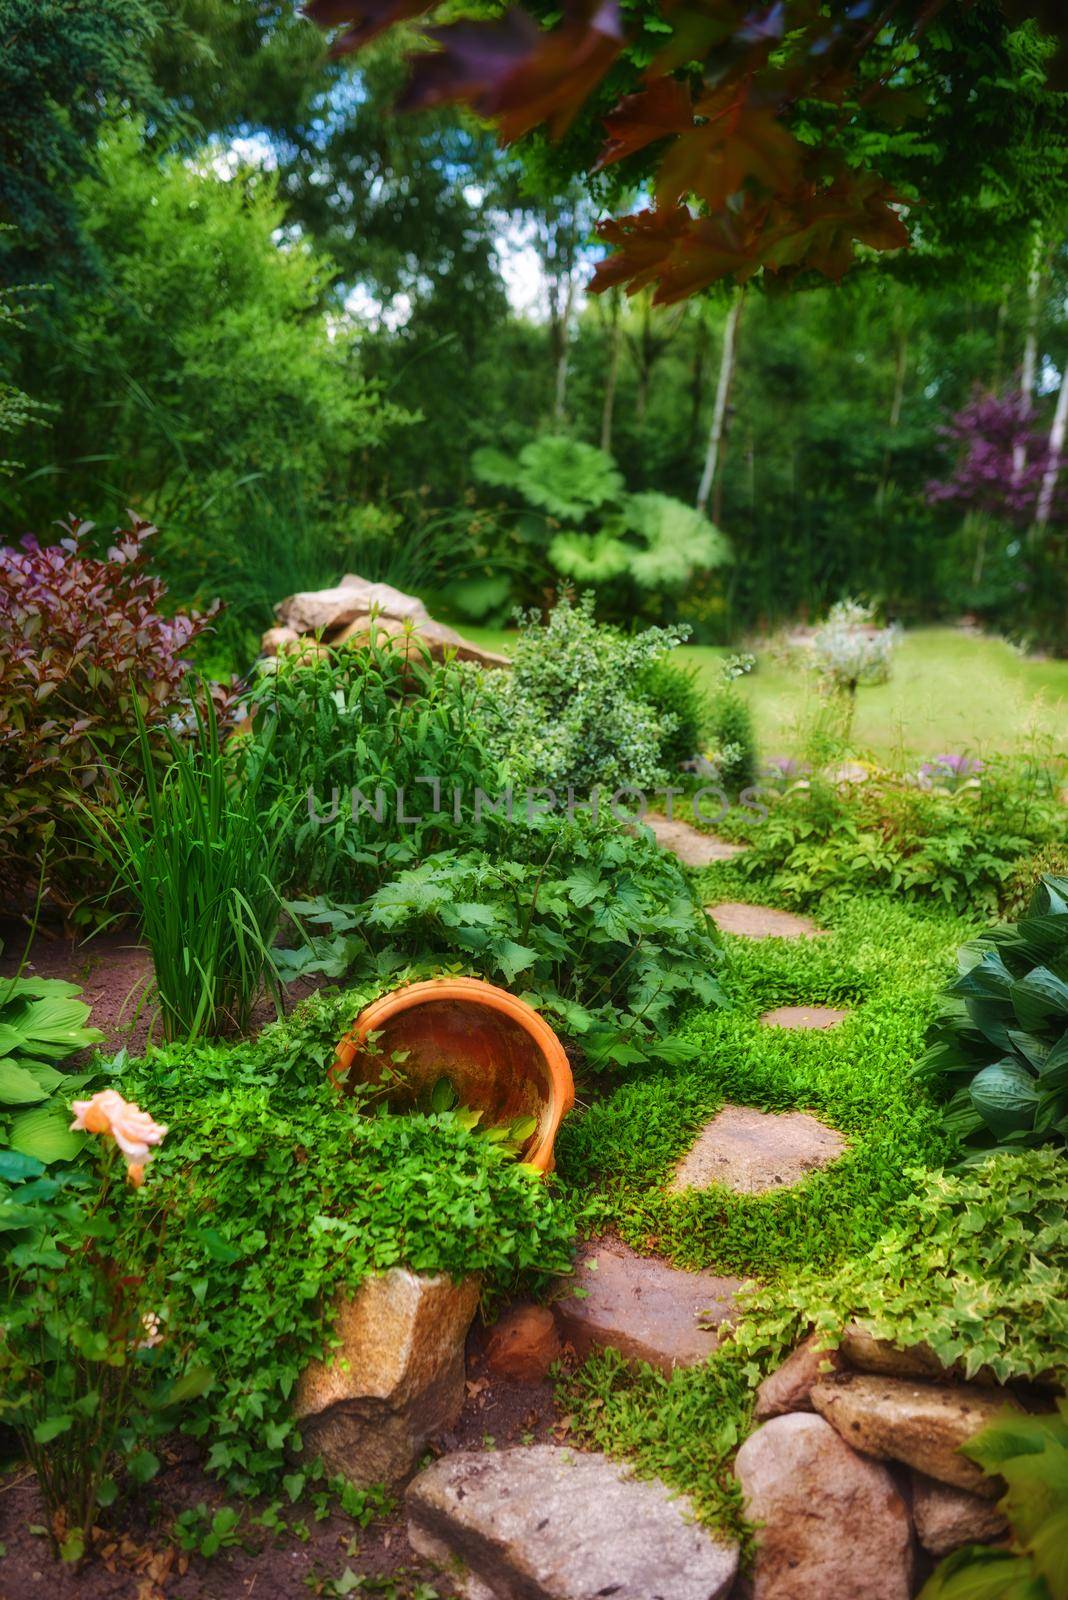 Late summer garden. A panorama photo of the garden in late summer